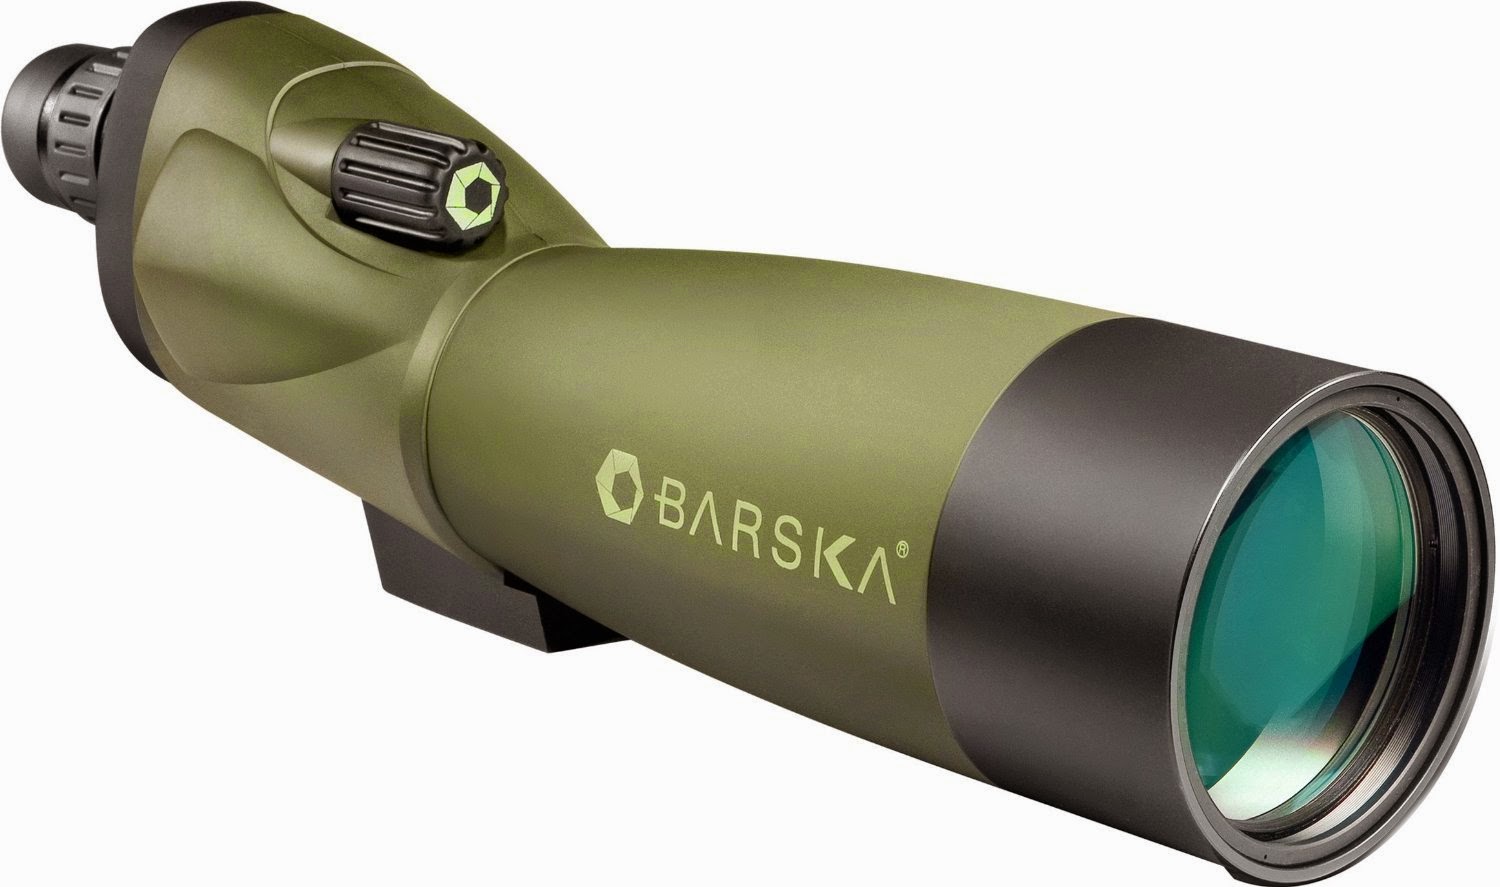 BARSKA Blackhawk 20-60x60 straight spotting scope, compact design, suitable for hunting and bird watching and wildlife spotting, multi-coated optics, waterproof & fog-proof